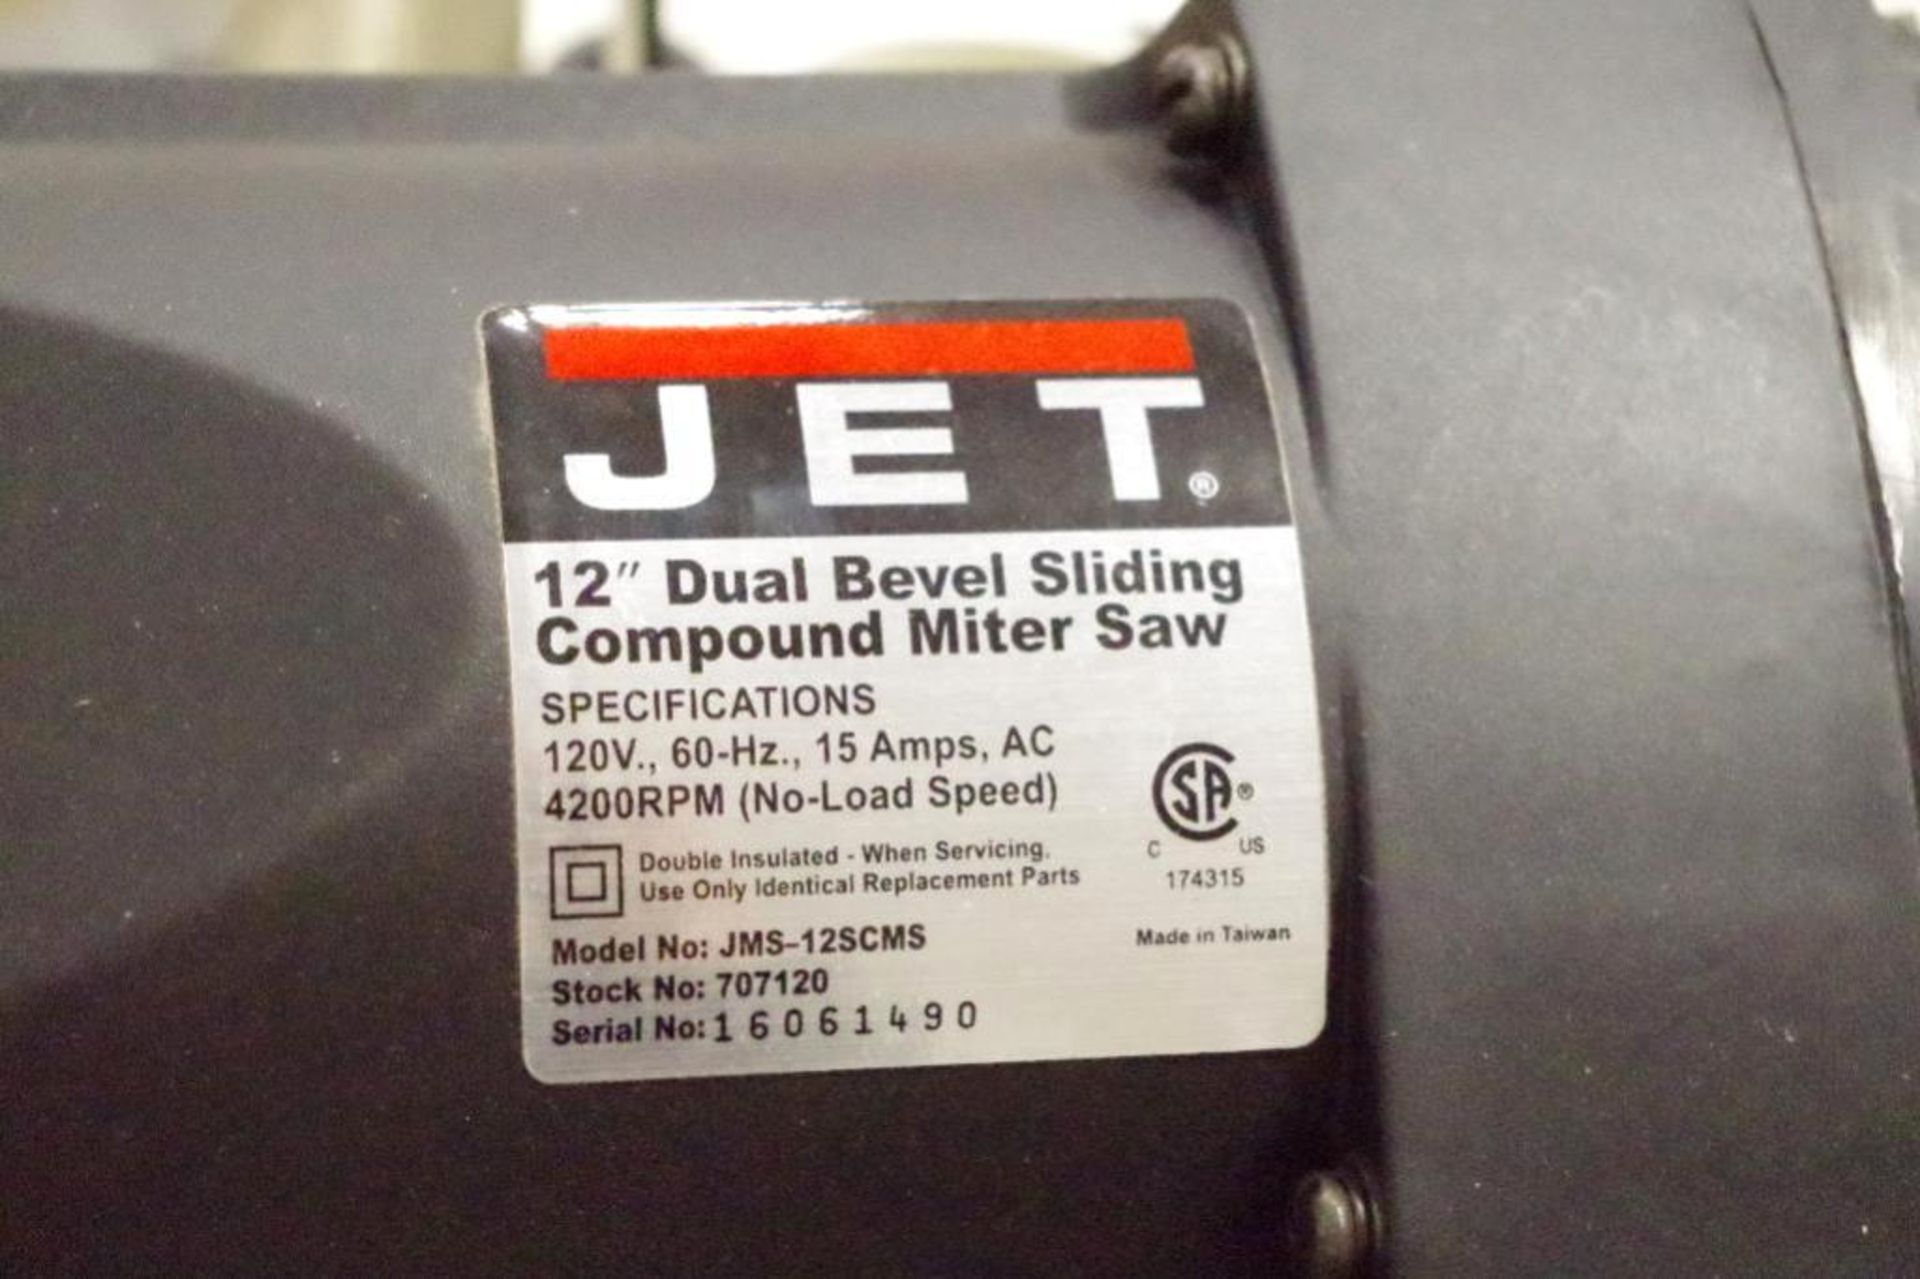 NEW JET 12" Dual Bevel Sliding Compound Miter Saw M/N JMS-12SCMS - Image 3 of 3